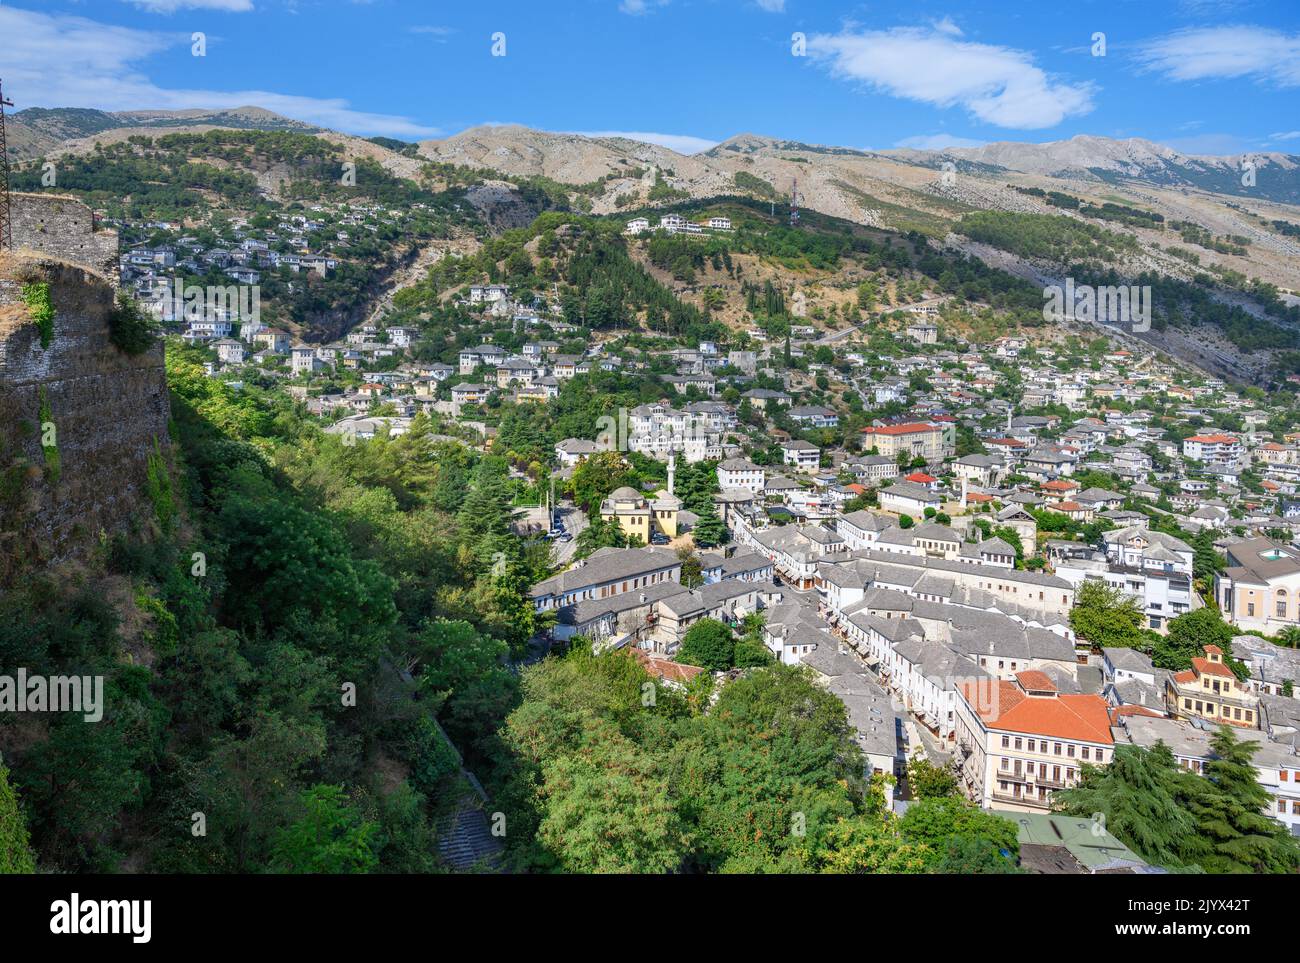 View from the walls of Gjirokastra Castle looking over the town, Gjirokastra (Gjirokaster), Albania Stock Photo